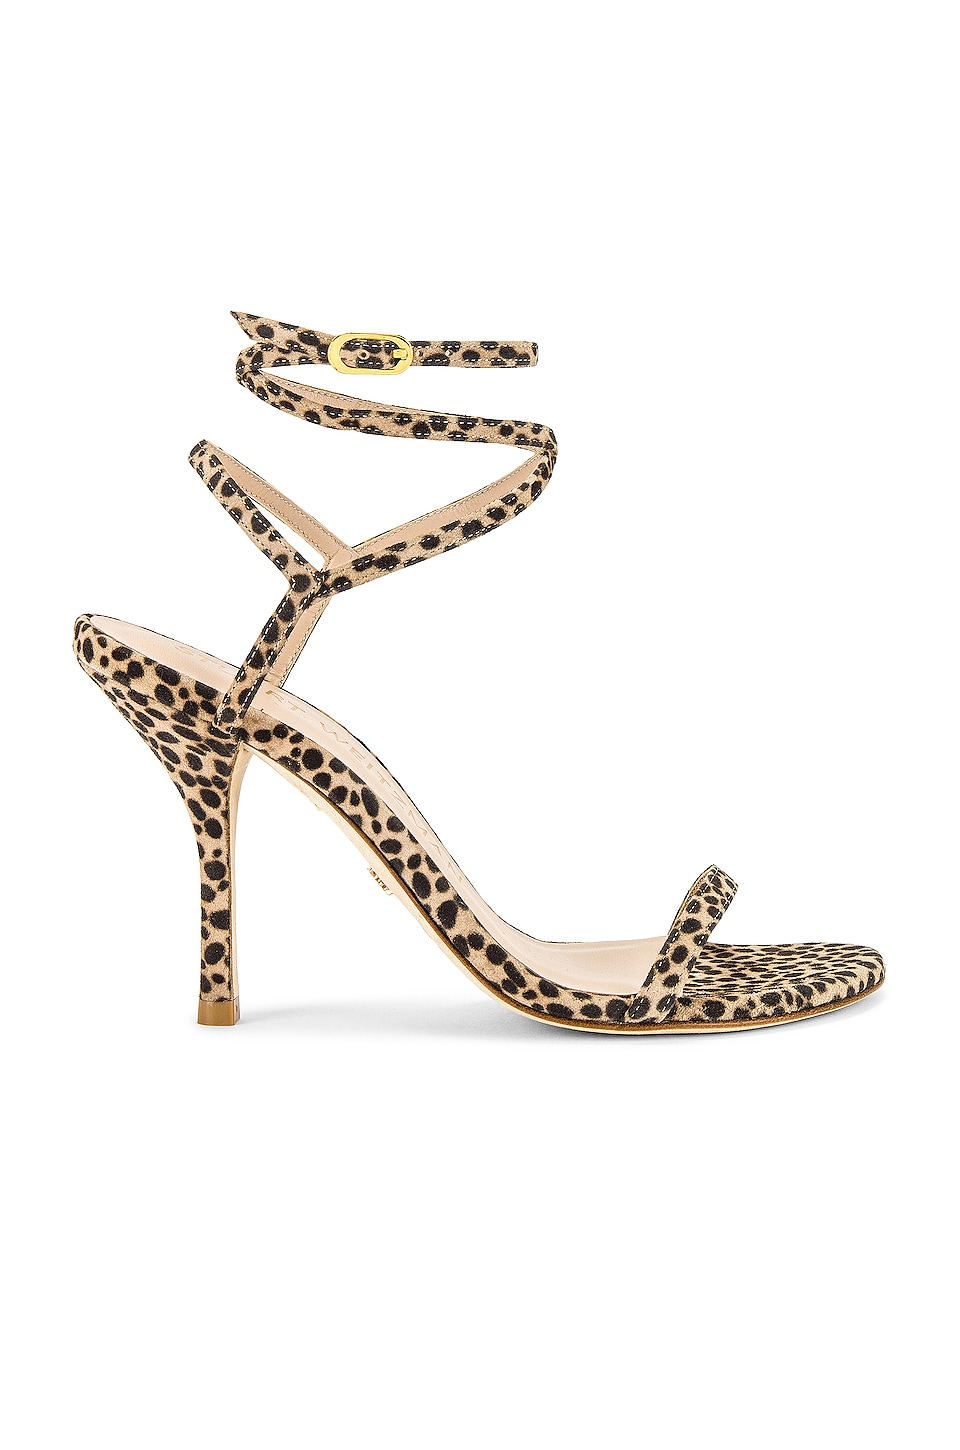 Stuart Weitzman X REVOLVE Merinda Sandal in Mini Cheetah | REVOLVE